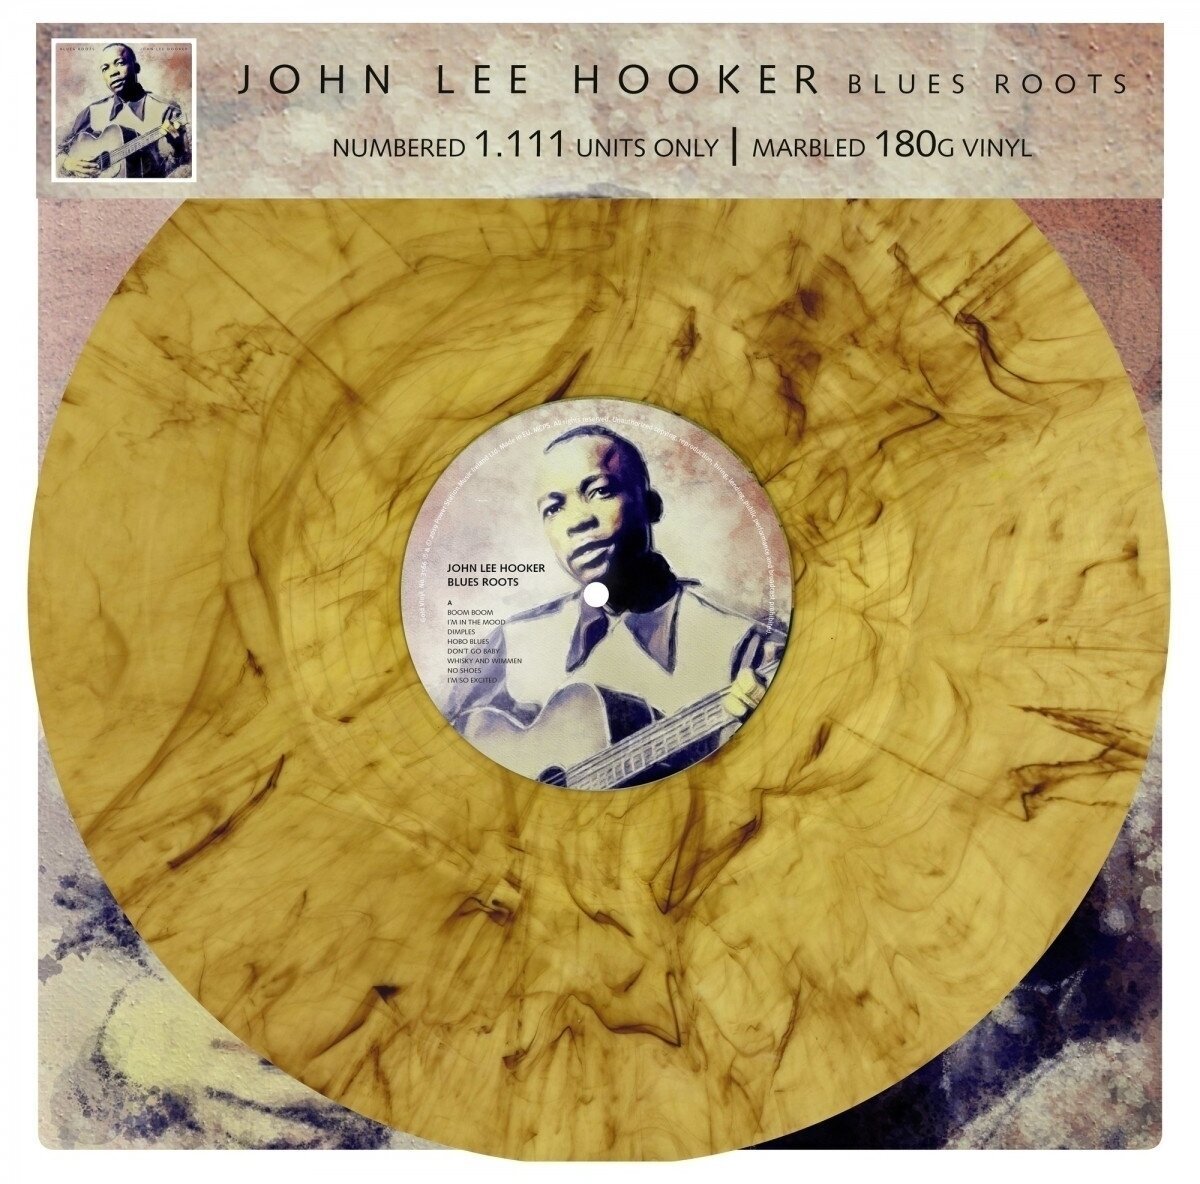 John Lee Hooker - Blues Roots (Limited Edition) (Numbered) (Marbled Coloured) (LP) John Lee Hooker